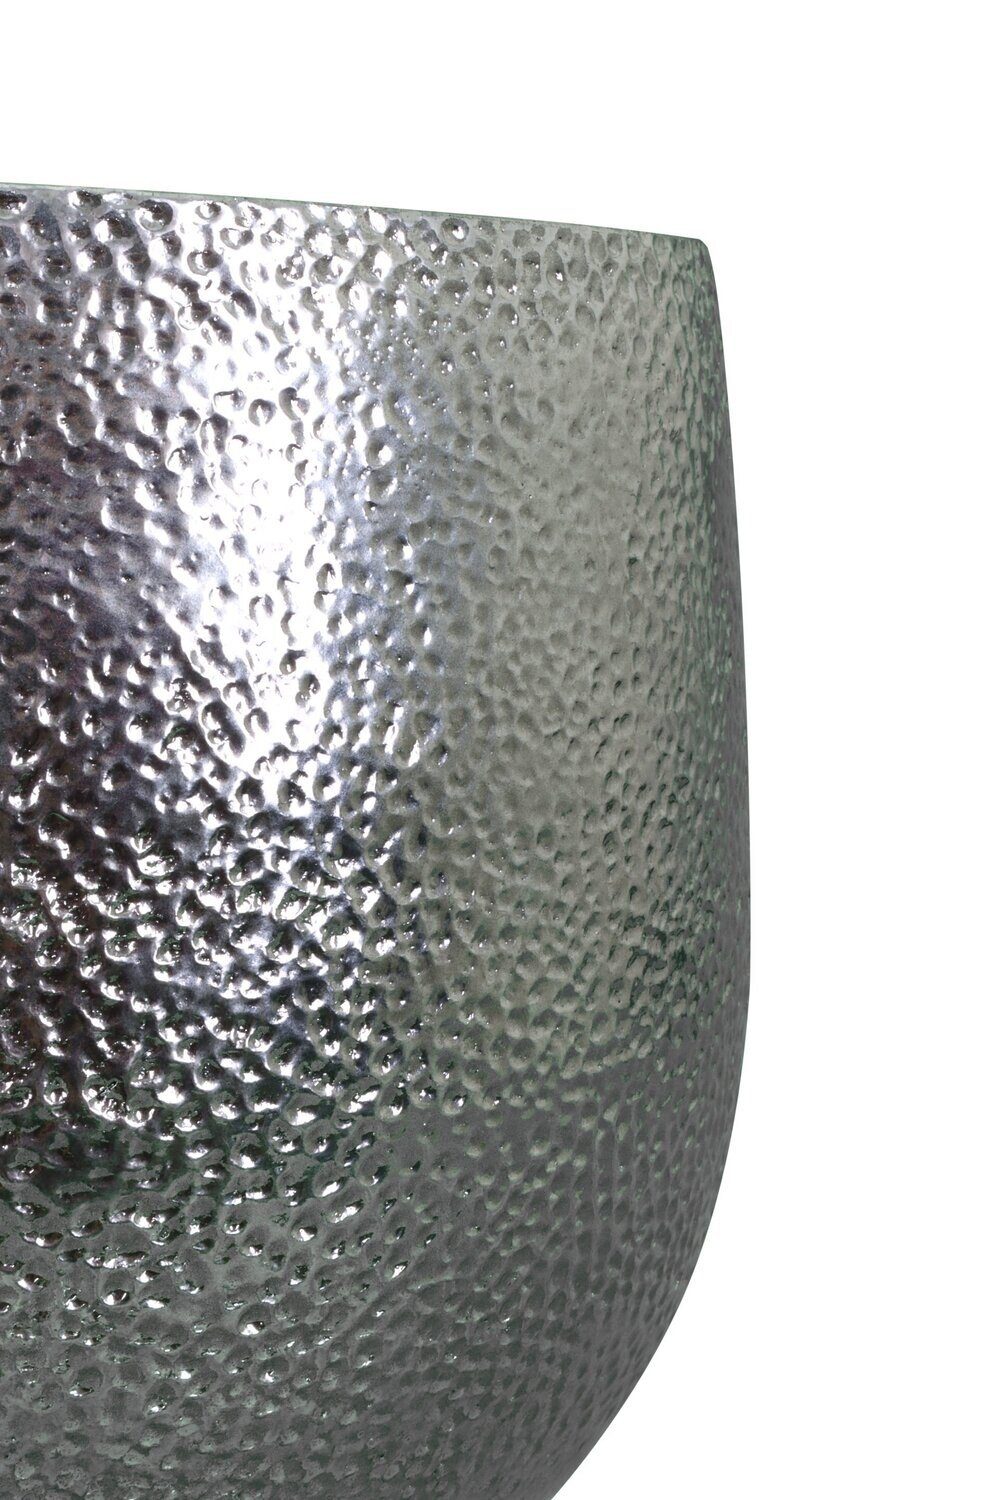 tegawo Silber, in 3er-Set Hammerschlagoptik Portugal Luxus-Keramik Übertopf in handgefertigt